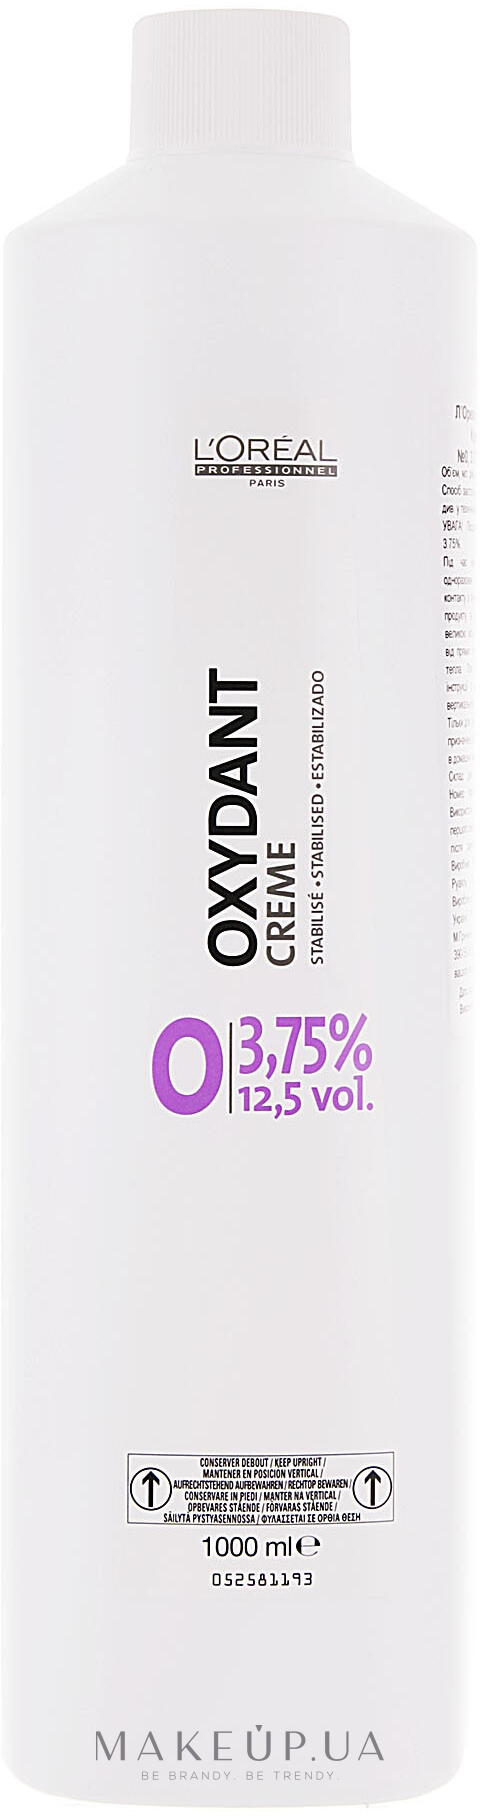 Крем-окислитель - L'Oreal Professionnel Oxydant 0 (3,75%) — фото 1000ml